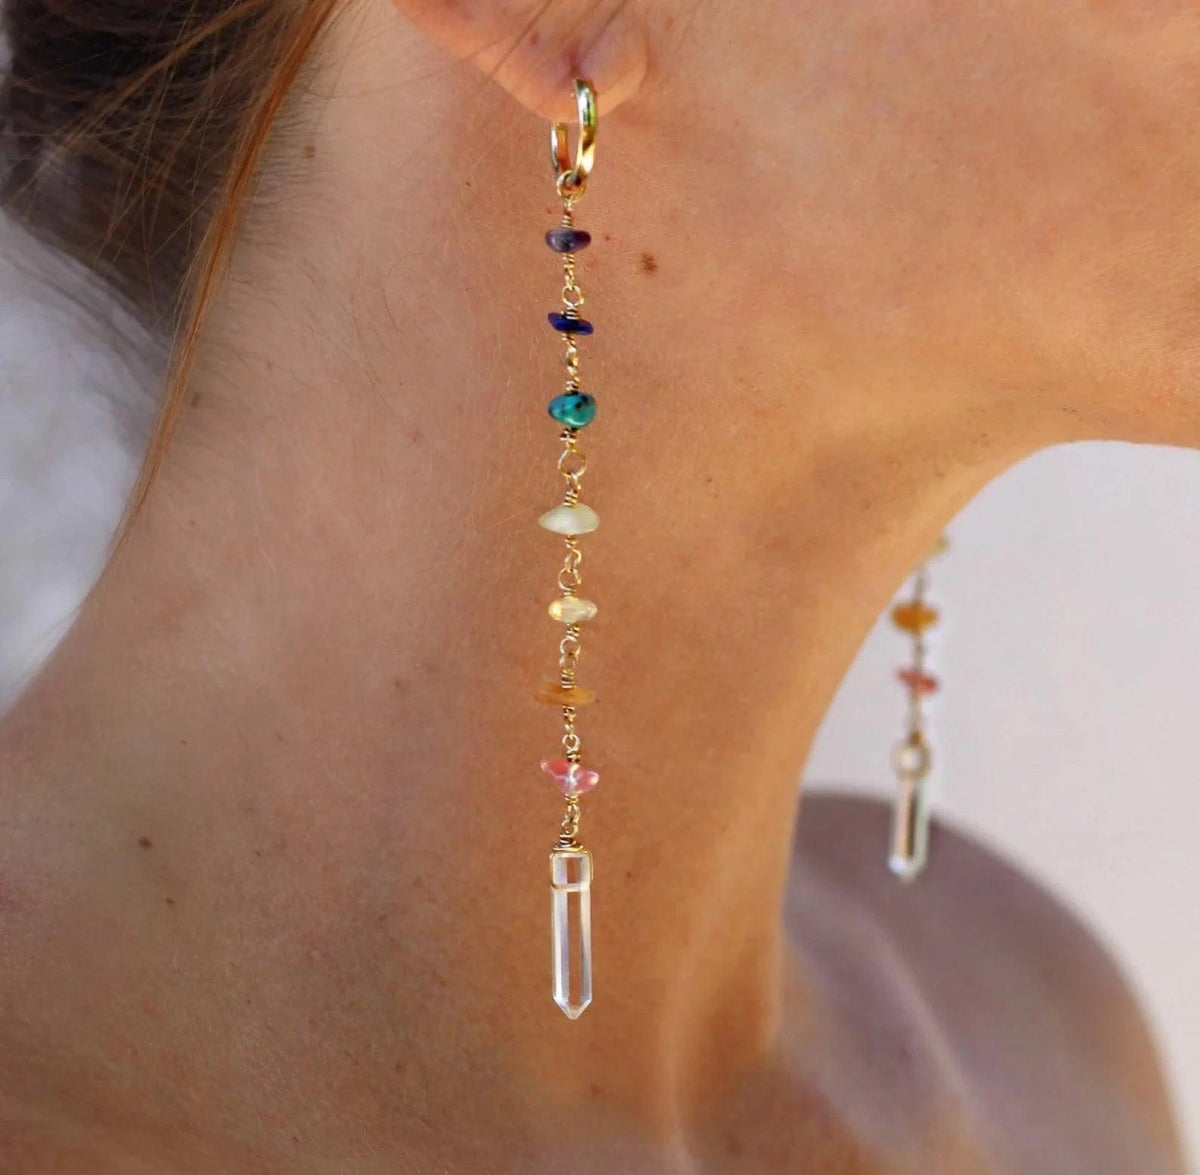 7 Chakra Crystal Rainbow Earrings